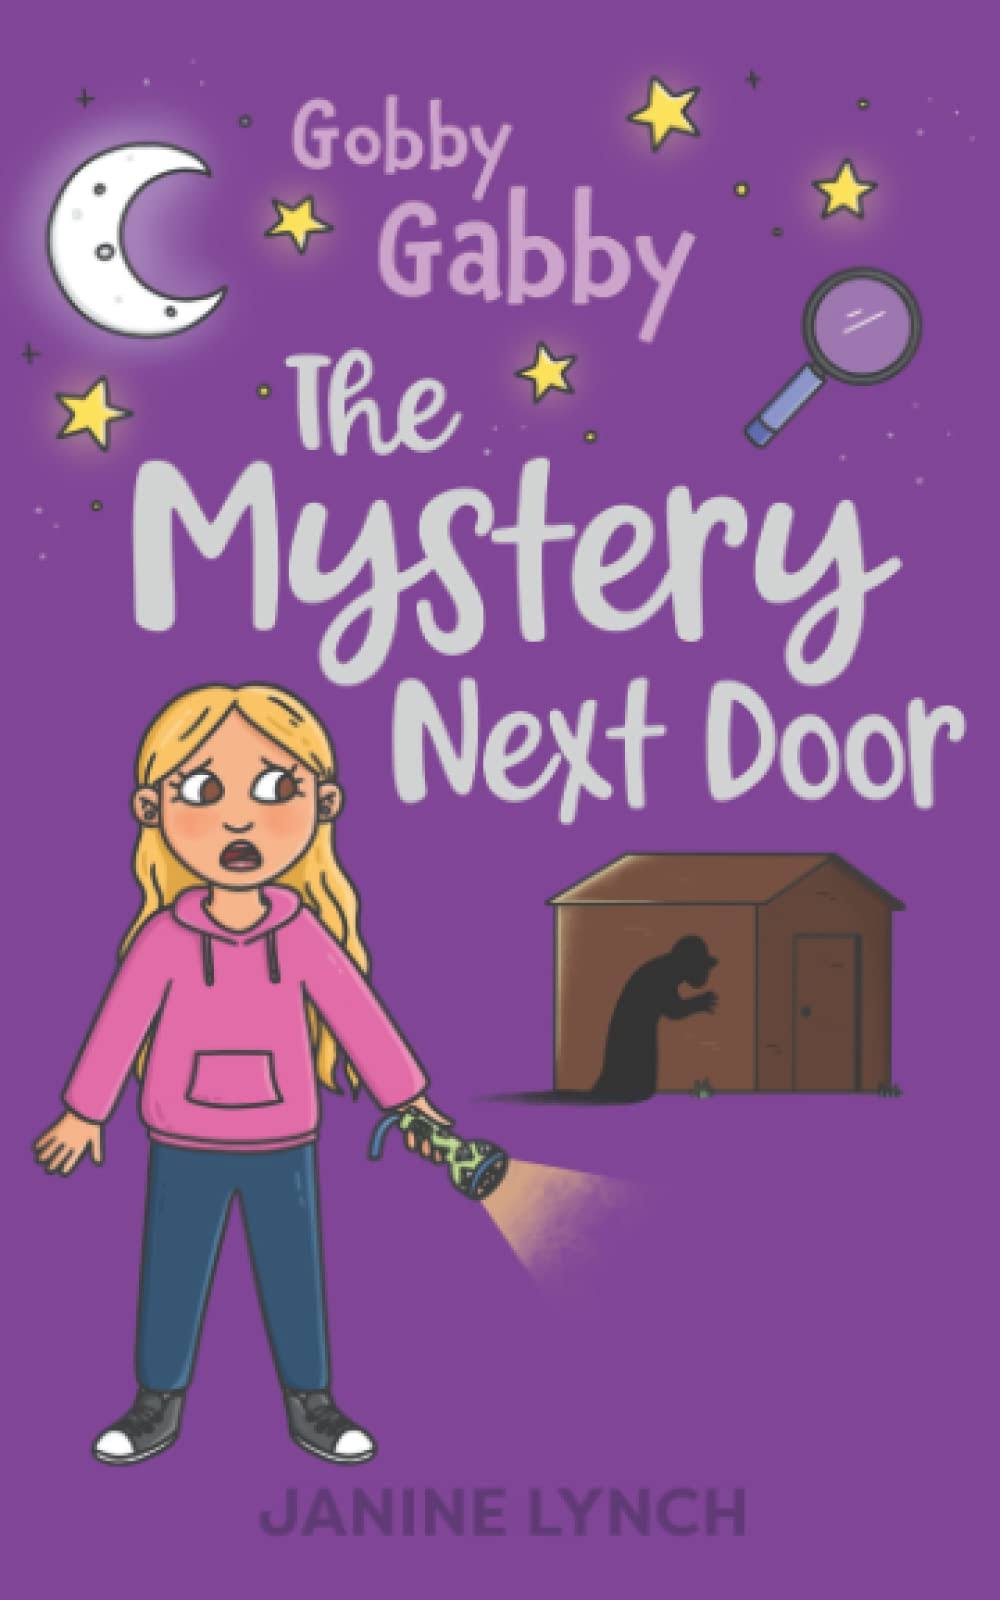 Gobby Gabby The Mystery Next Door by Janine Lynch